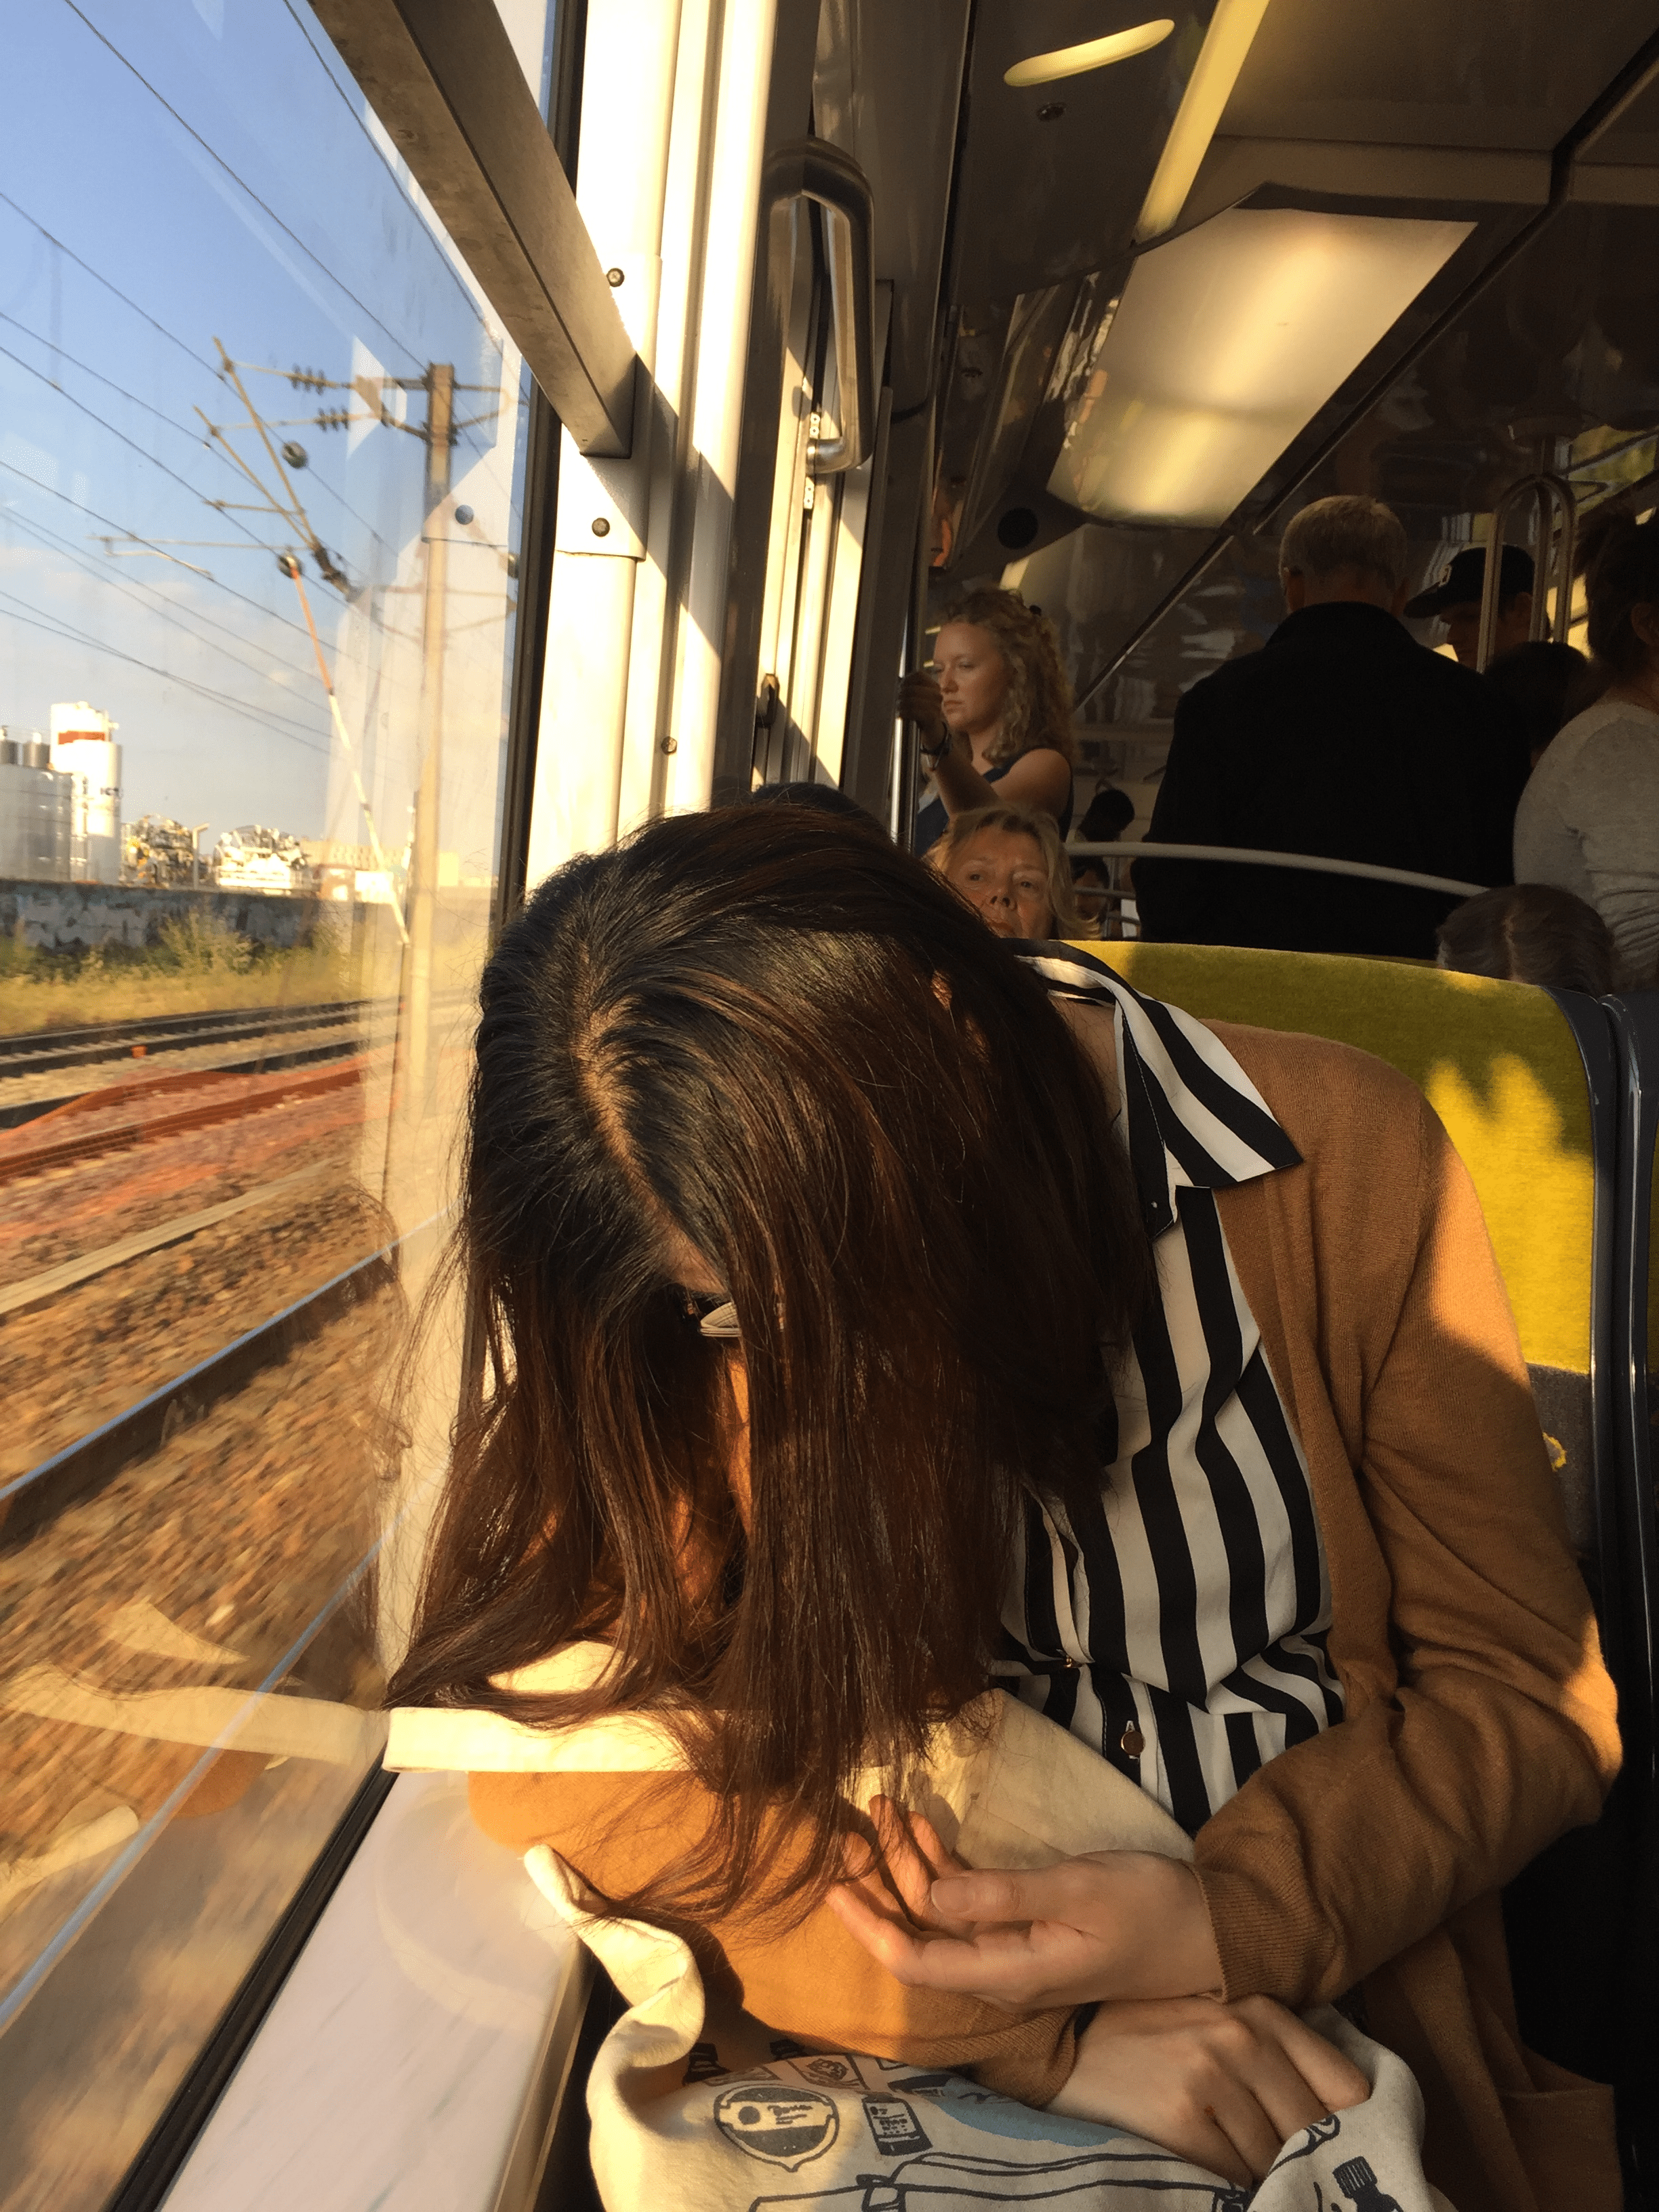 girl-on-train